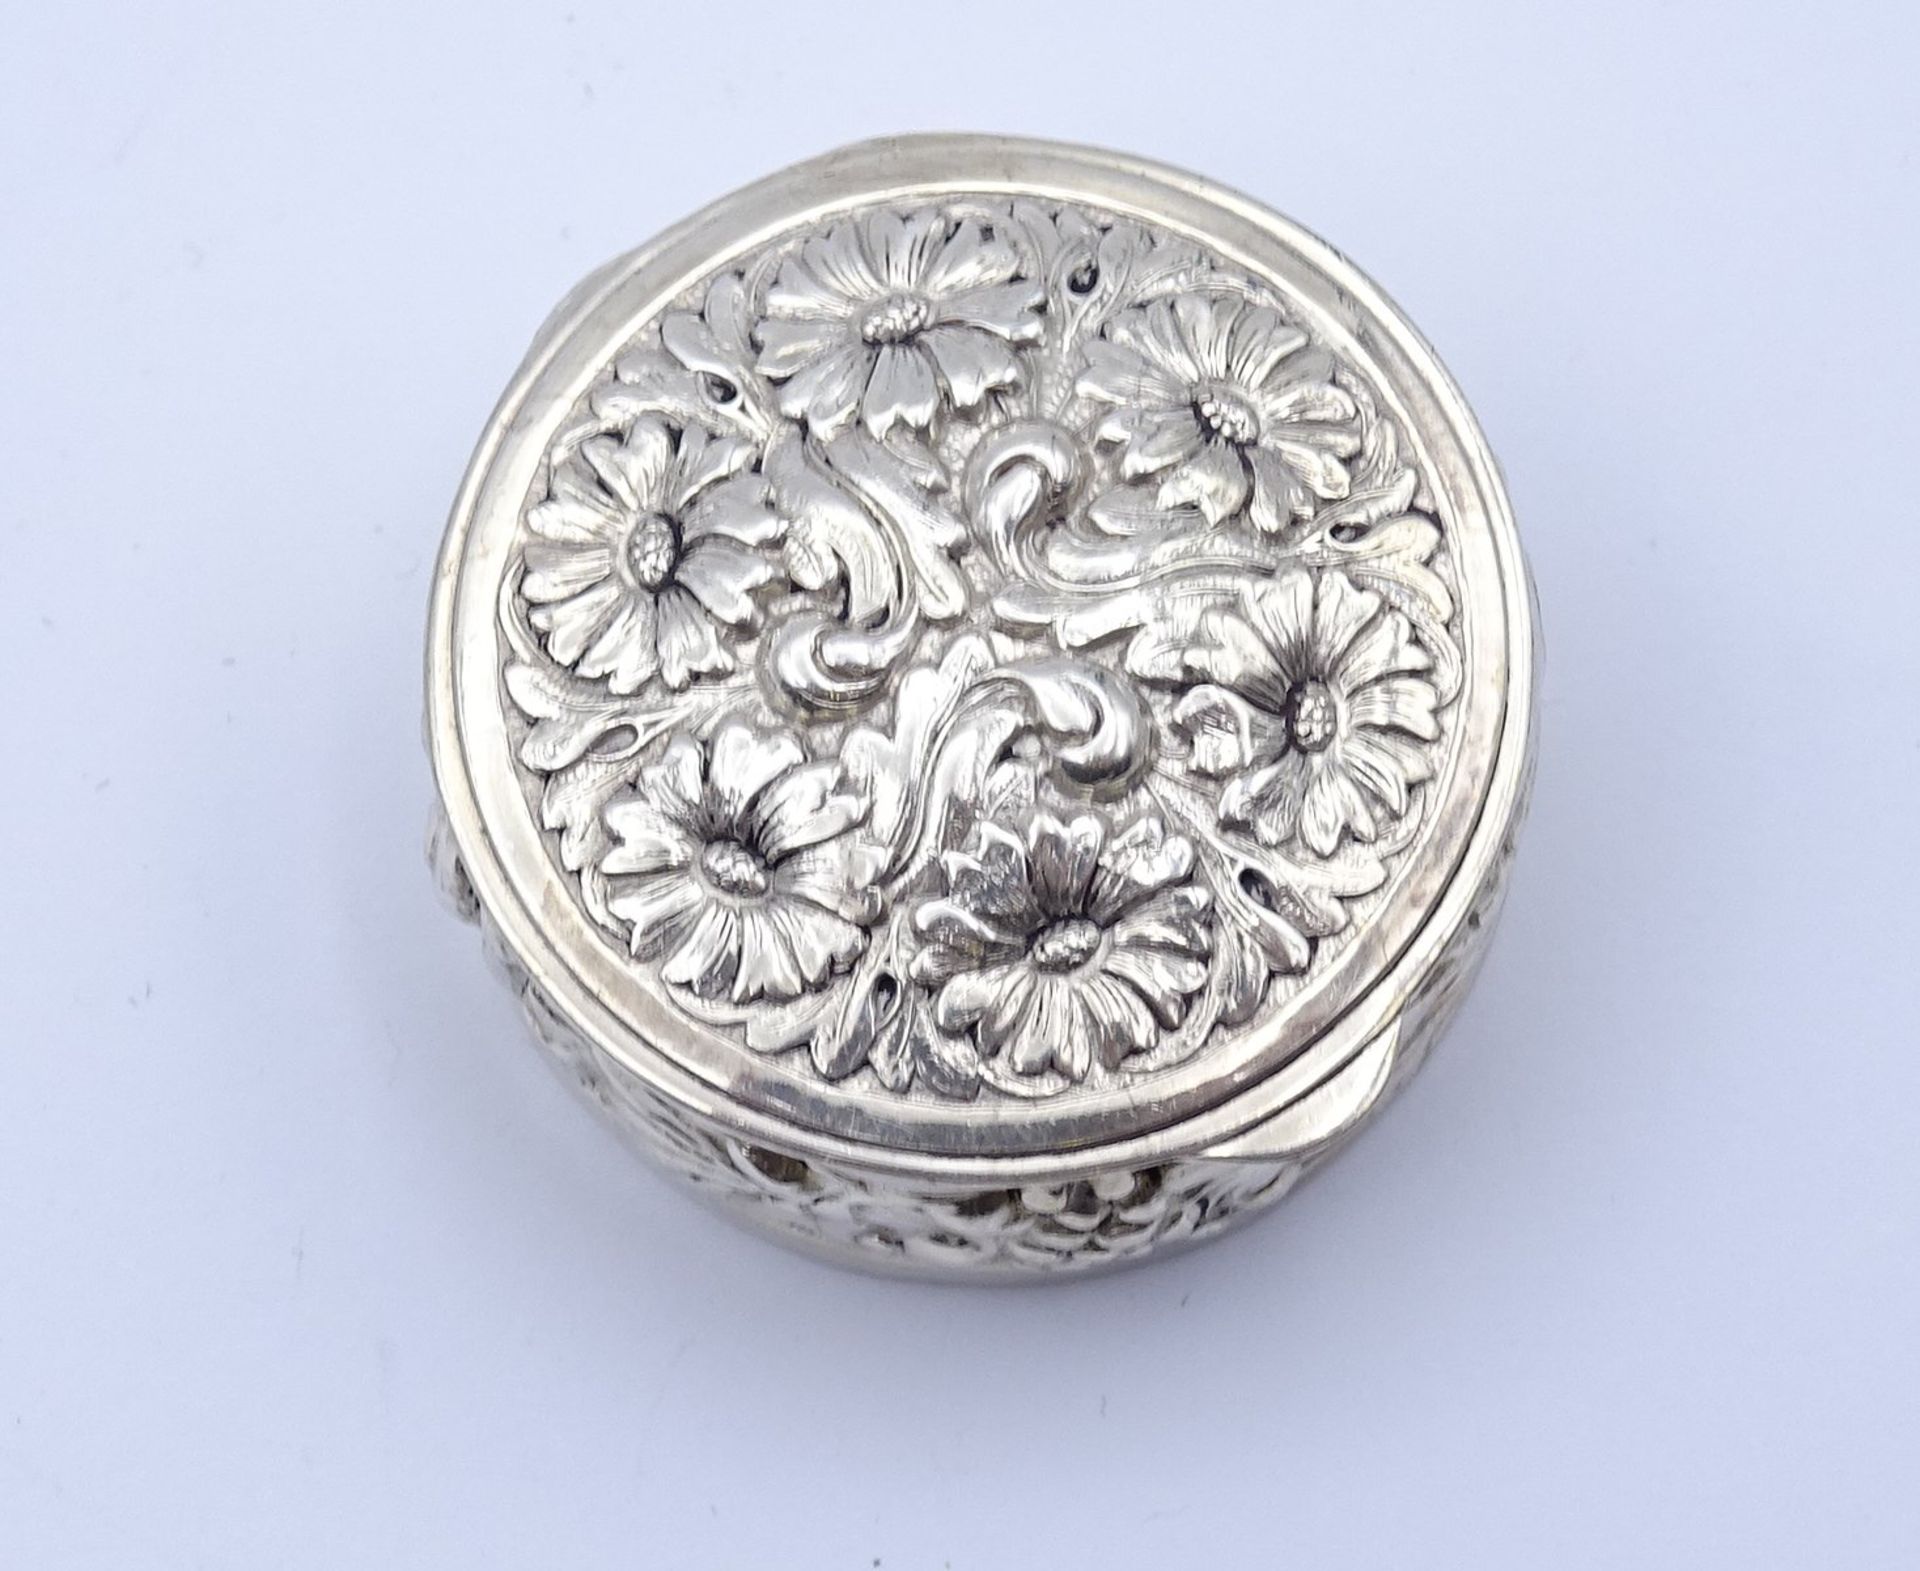 kl. runde Pillendose, Silber 0.925 mit florale Verzierungen, 15g., D. 32mm